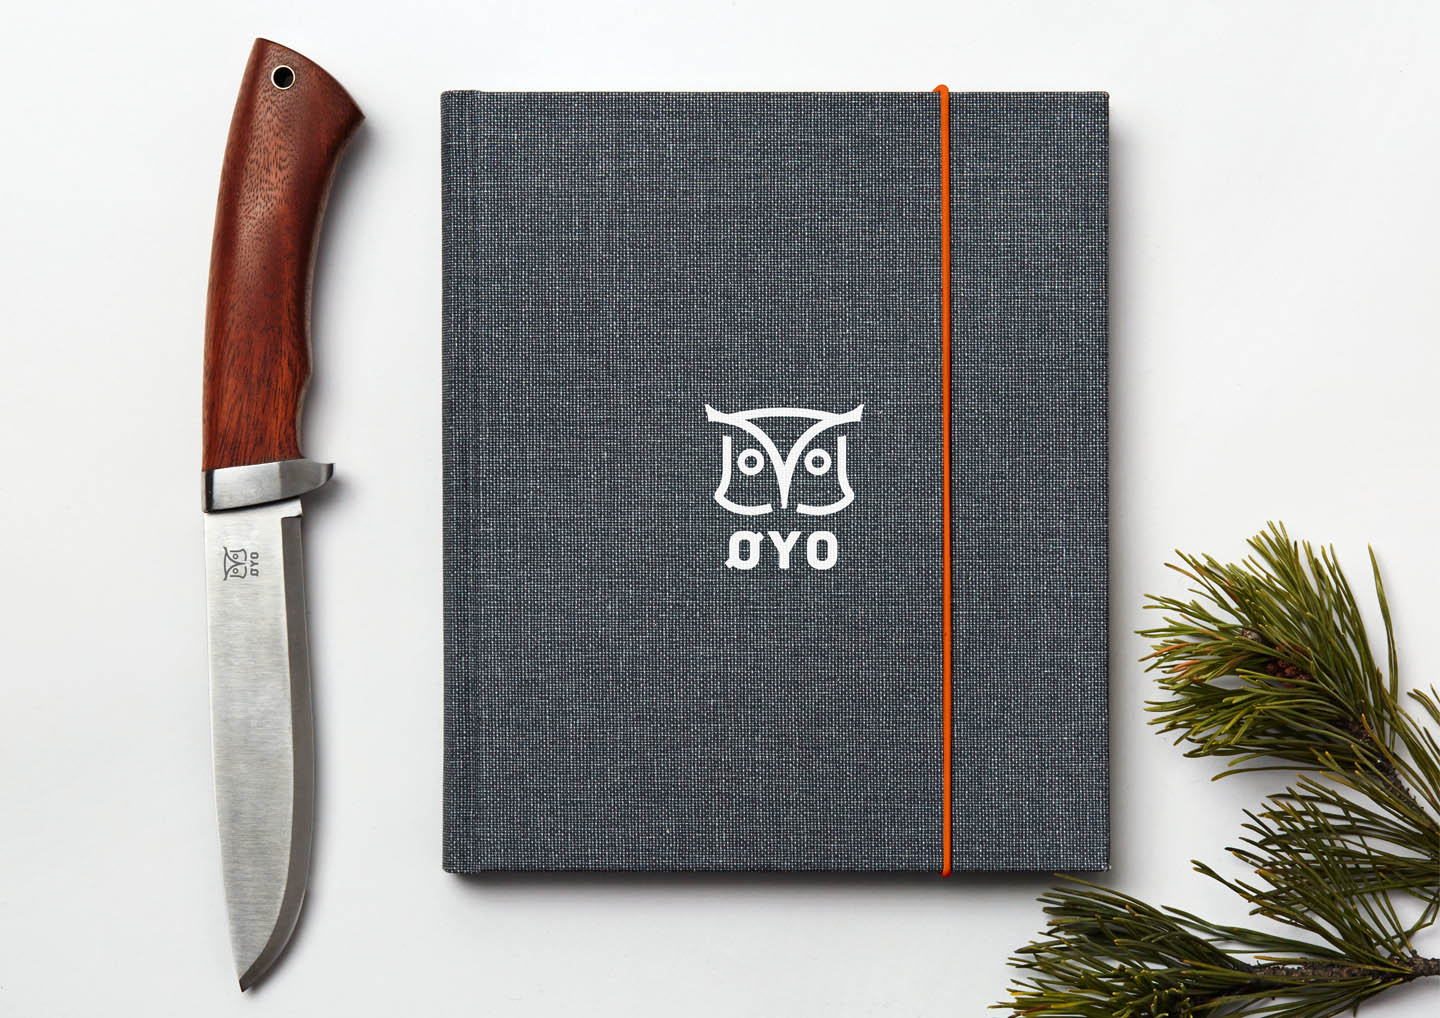 Øyo knife and book